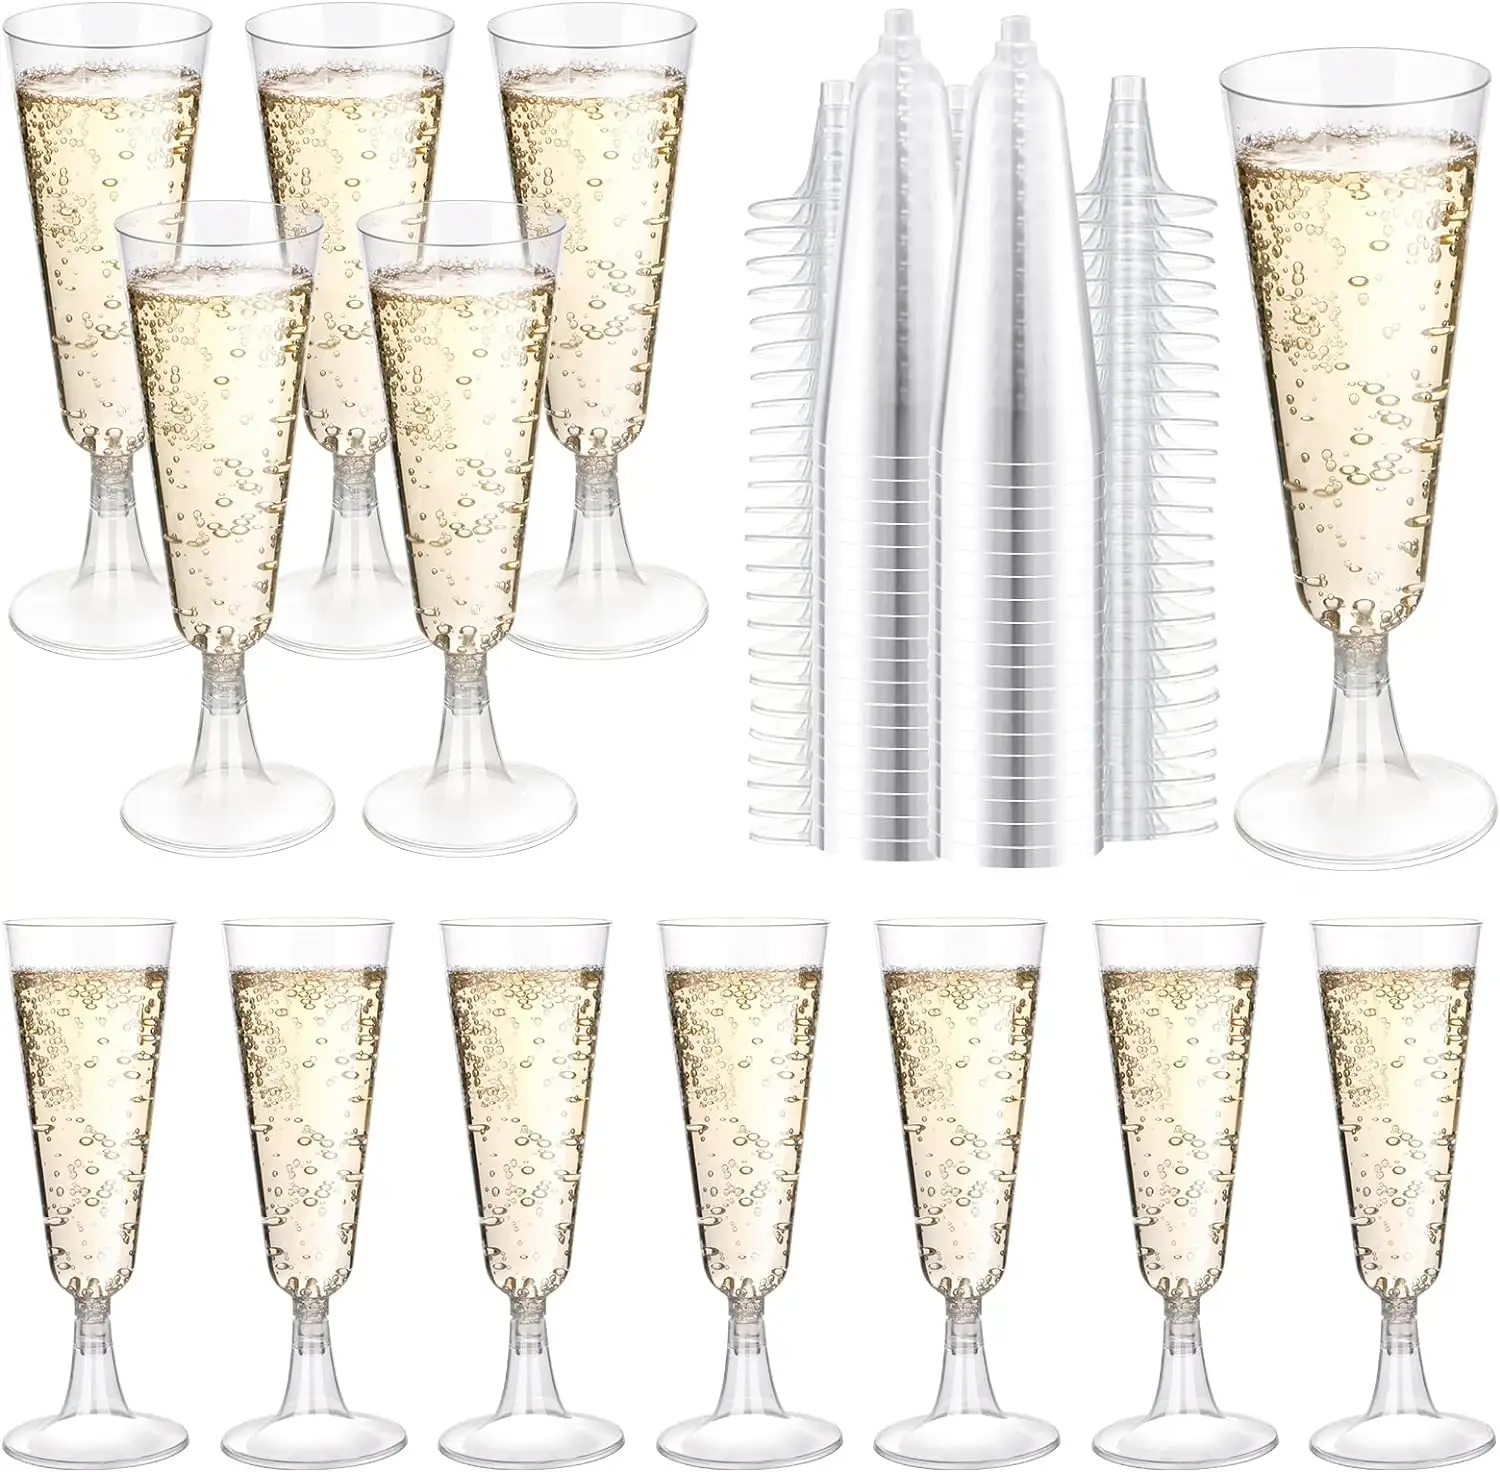 Venta al por mayor de cristal transparente boda tostado copas fiesta cóctel tazas Acción de Gracias a granel 5,5 oz copas de champán de plástico